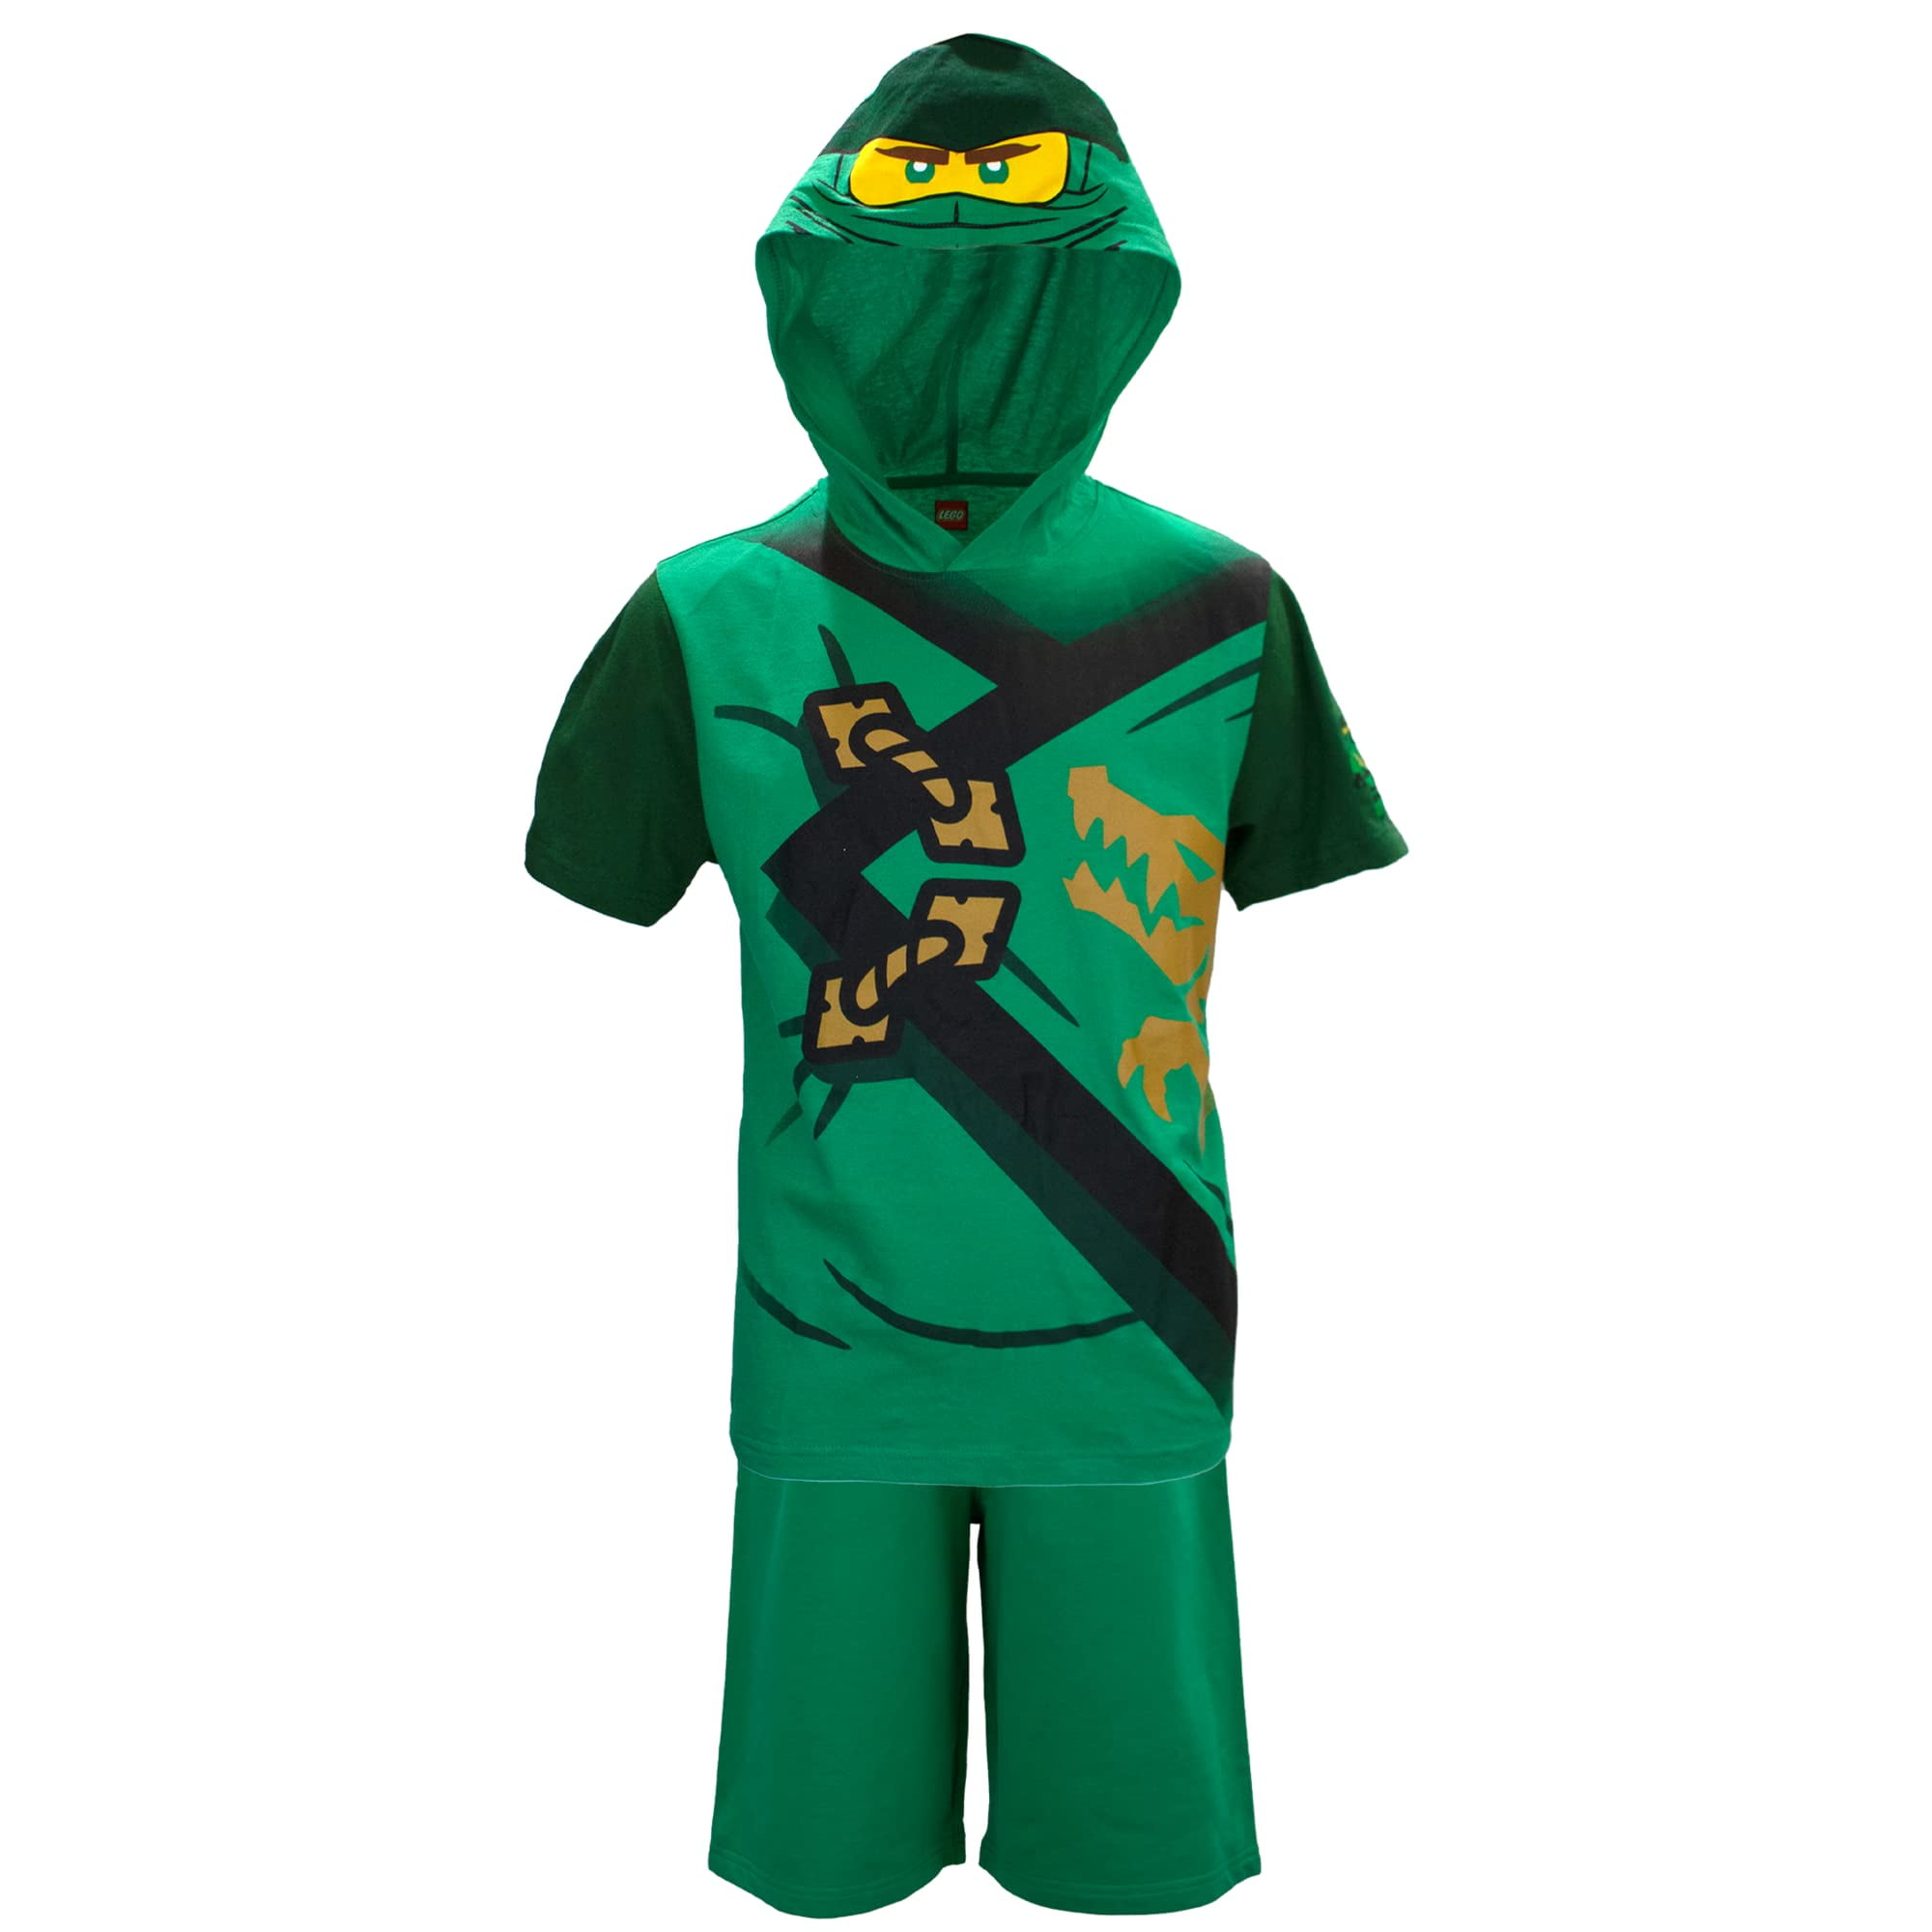 LEGO Ninjago Shorts with Boys and T-Shirt, Hooded Lloyd Set 10/12 Size Ninjago cosplay Green Matching